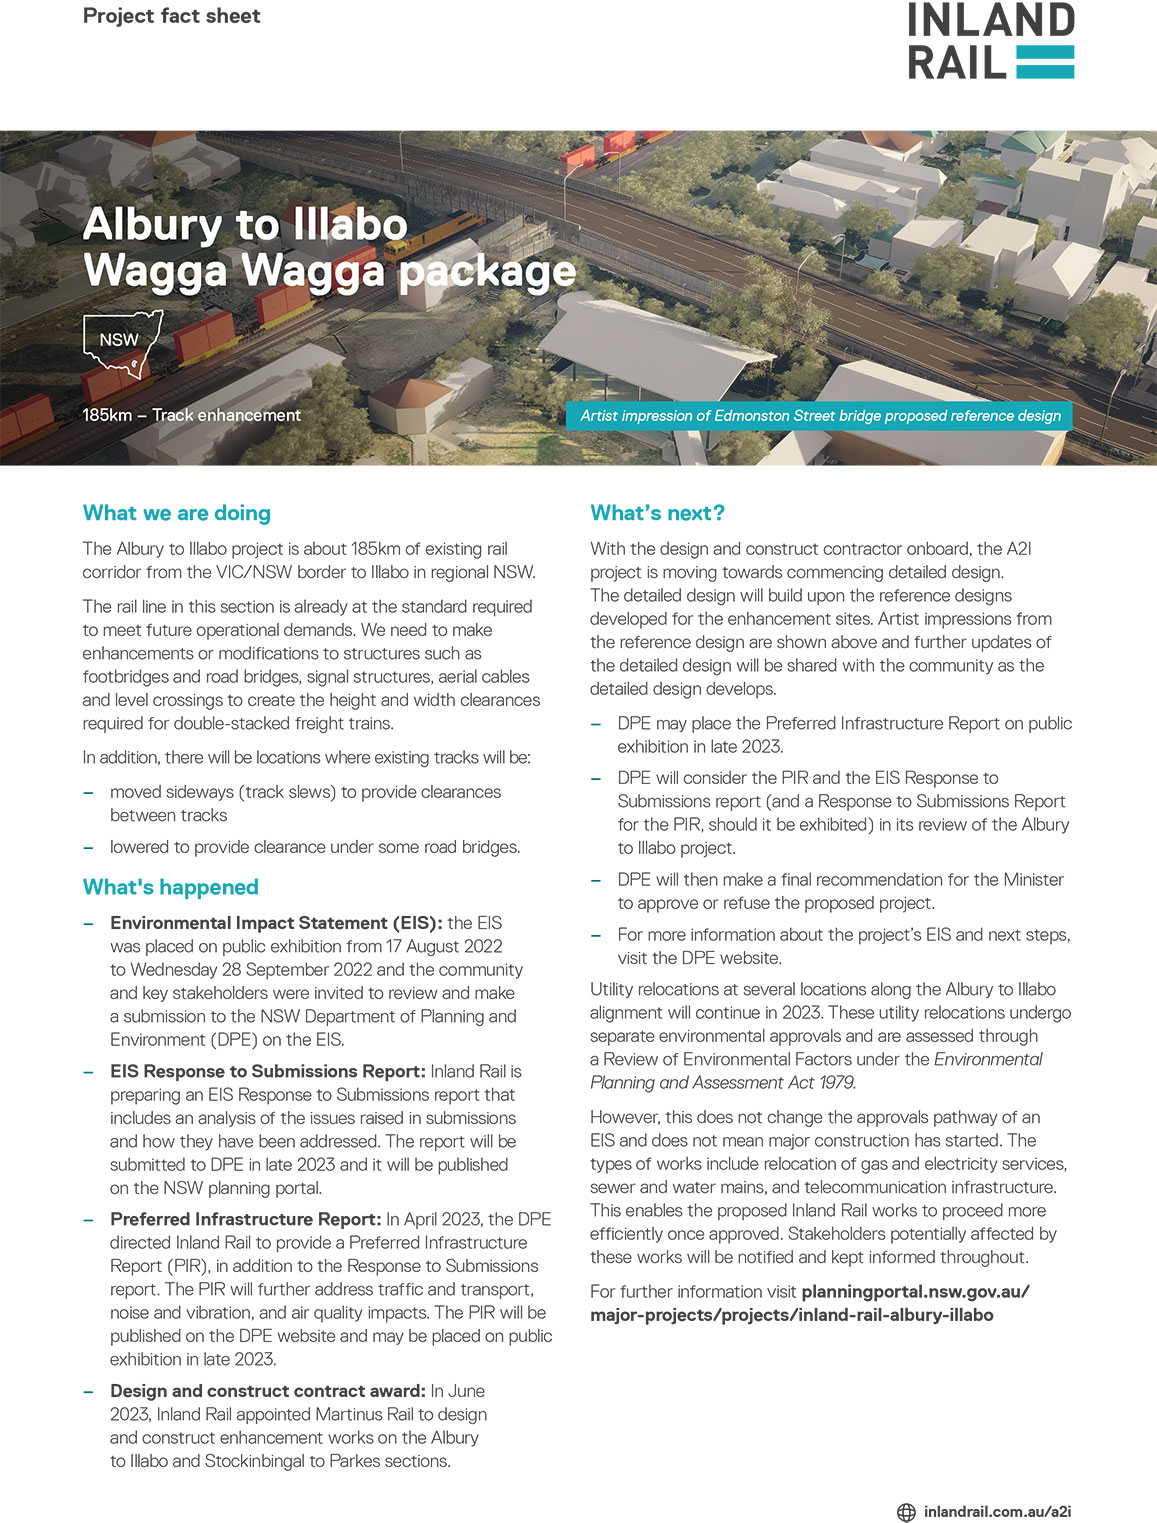 Image thumbnail of Albury to Illabo – Wagga Wagga package project fact sheet